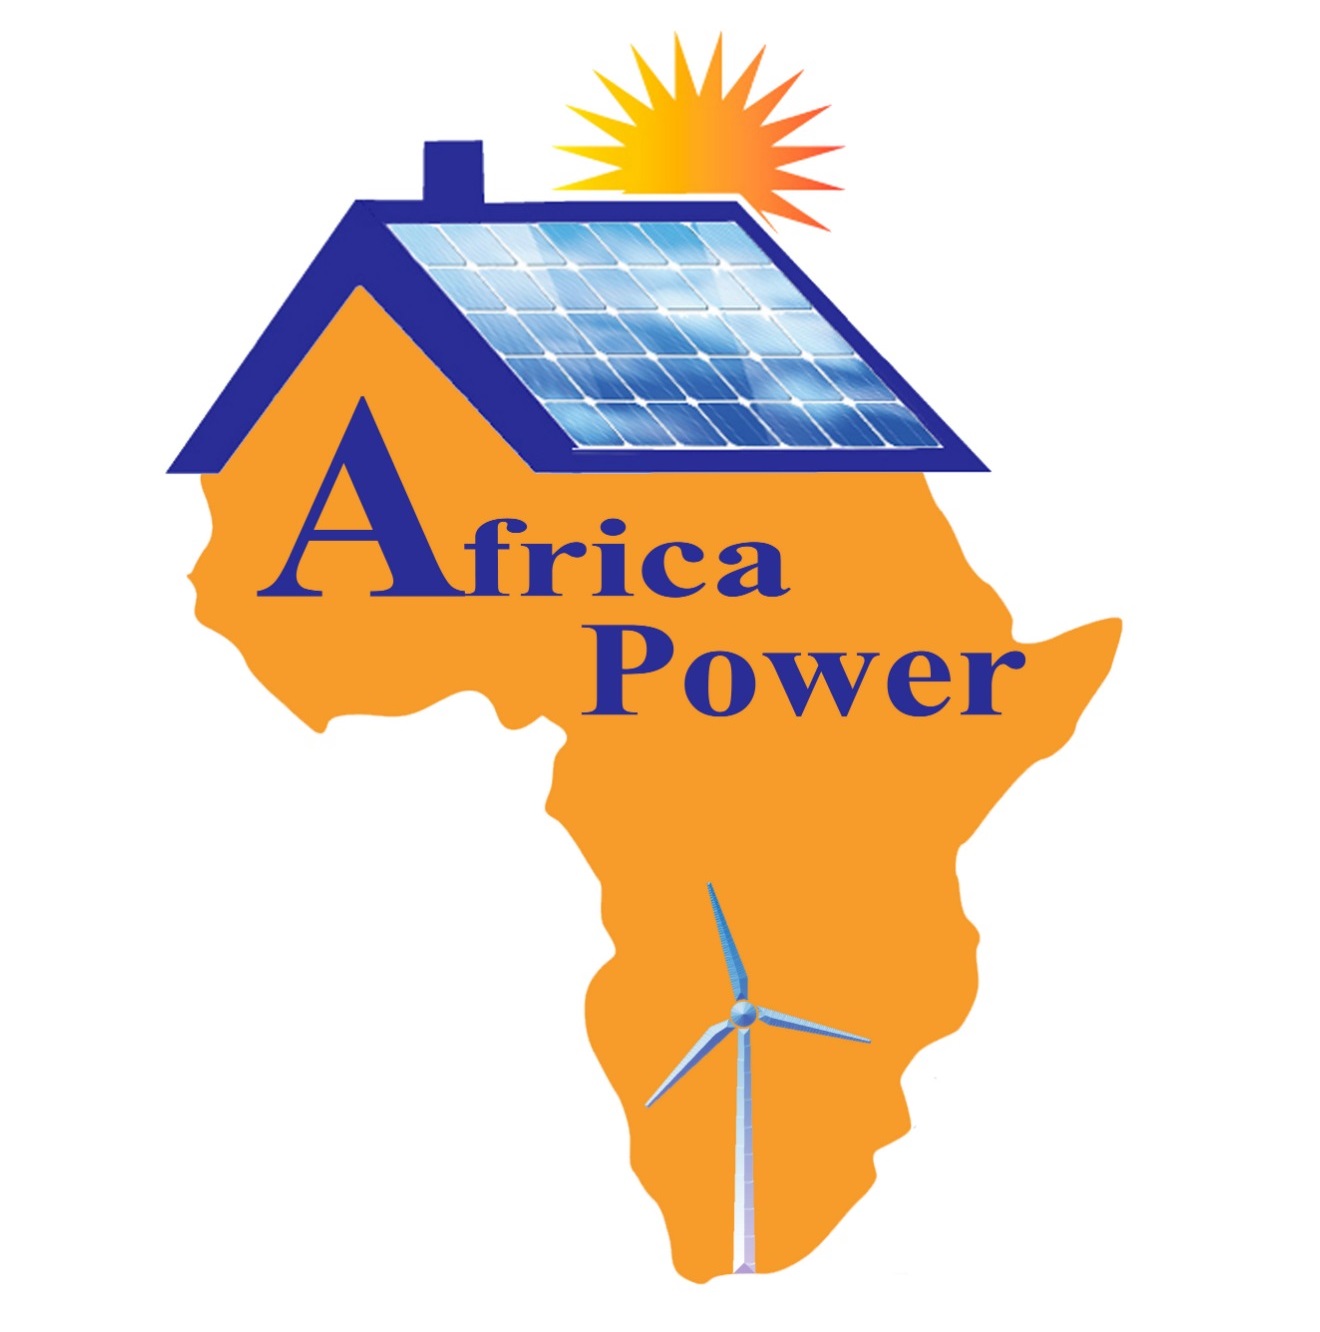 Africa power